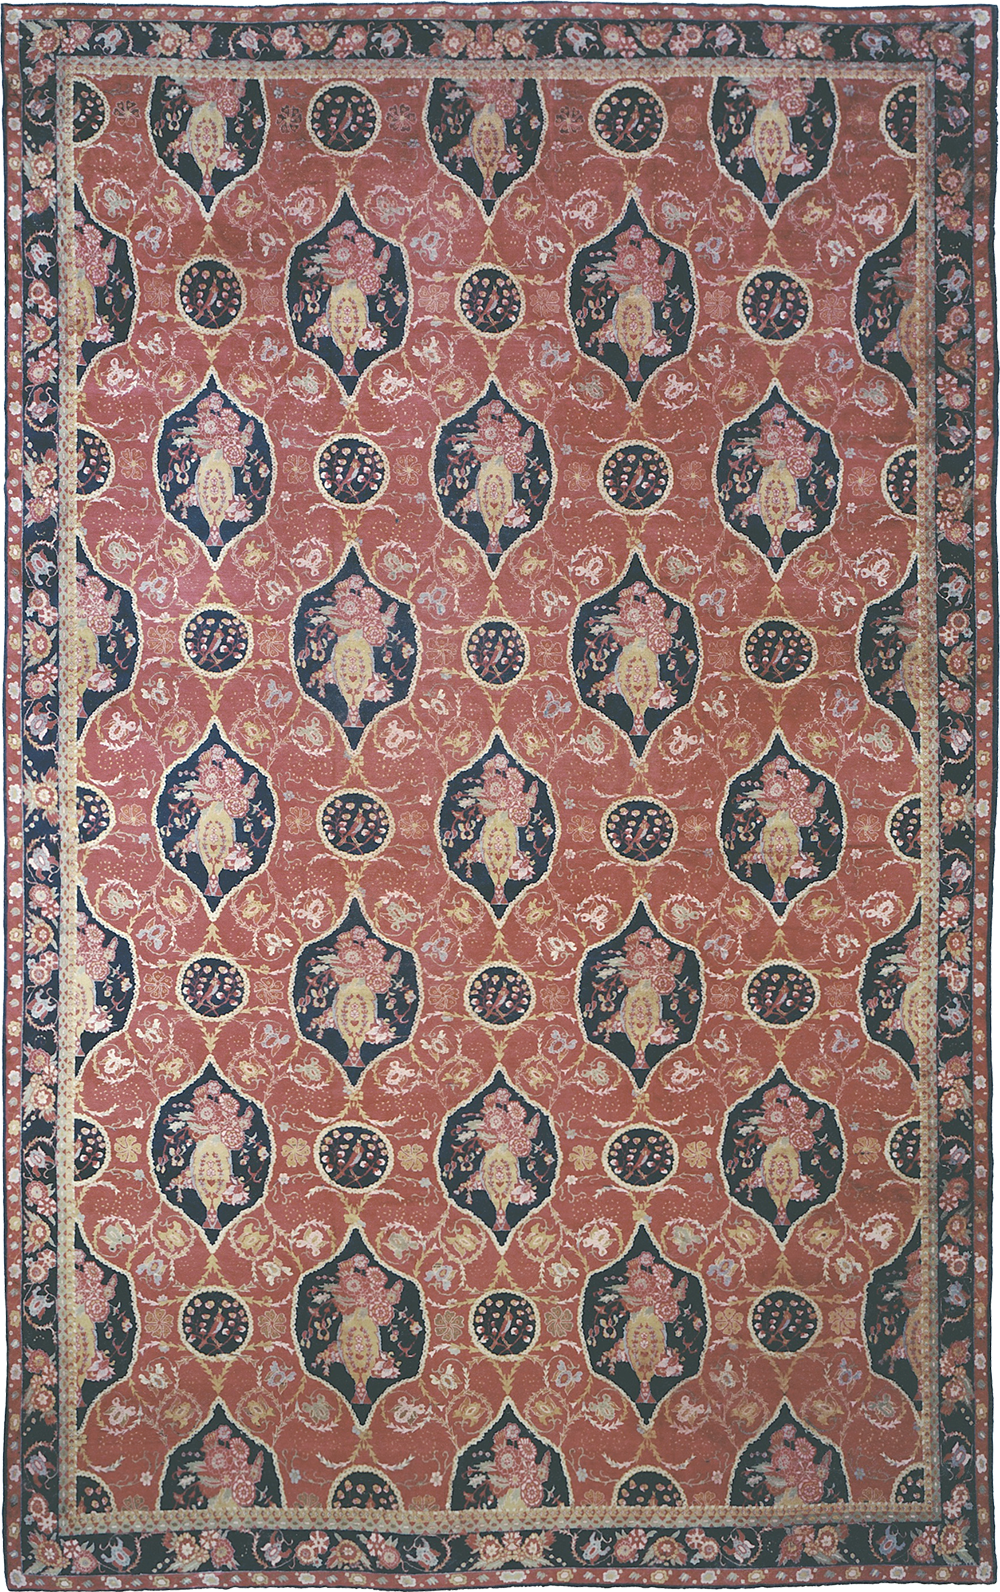 Rare Indian carpet